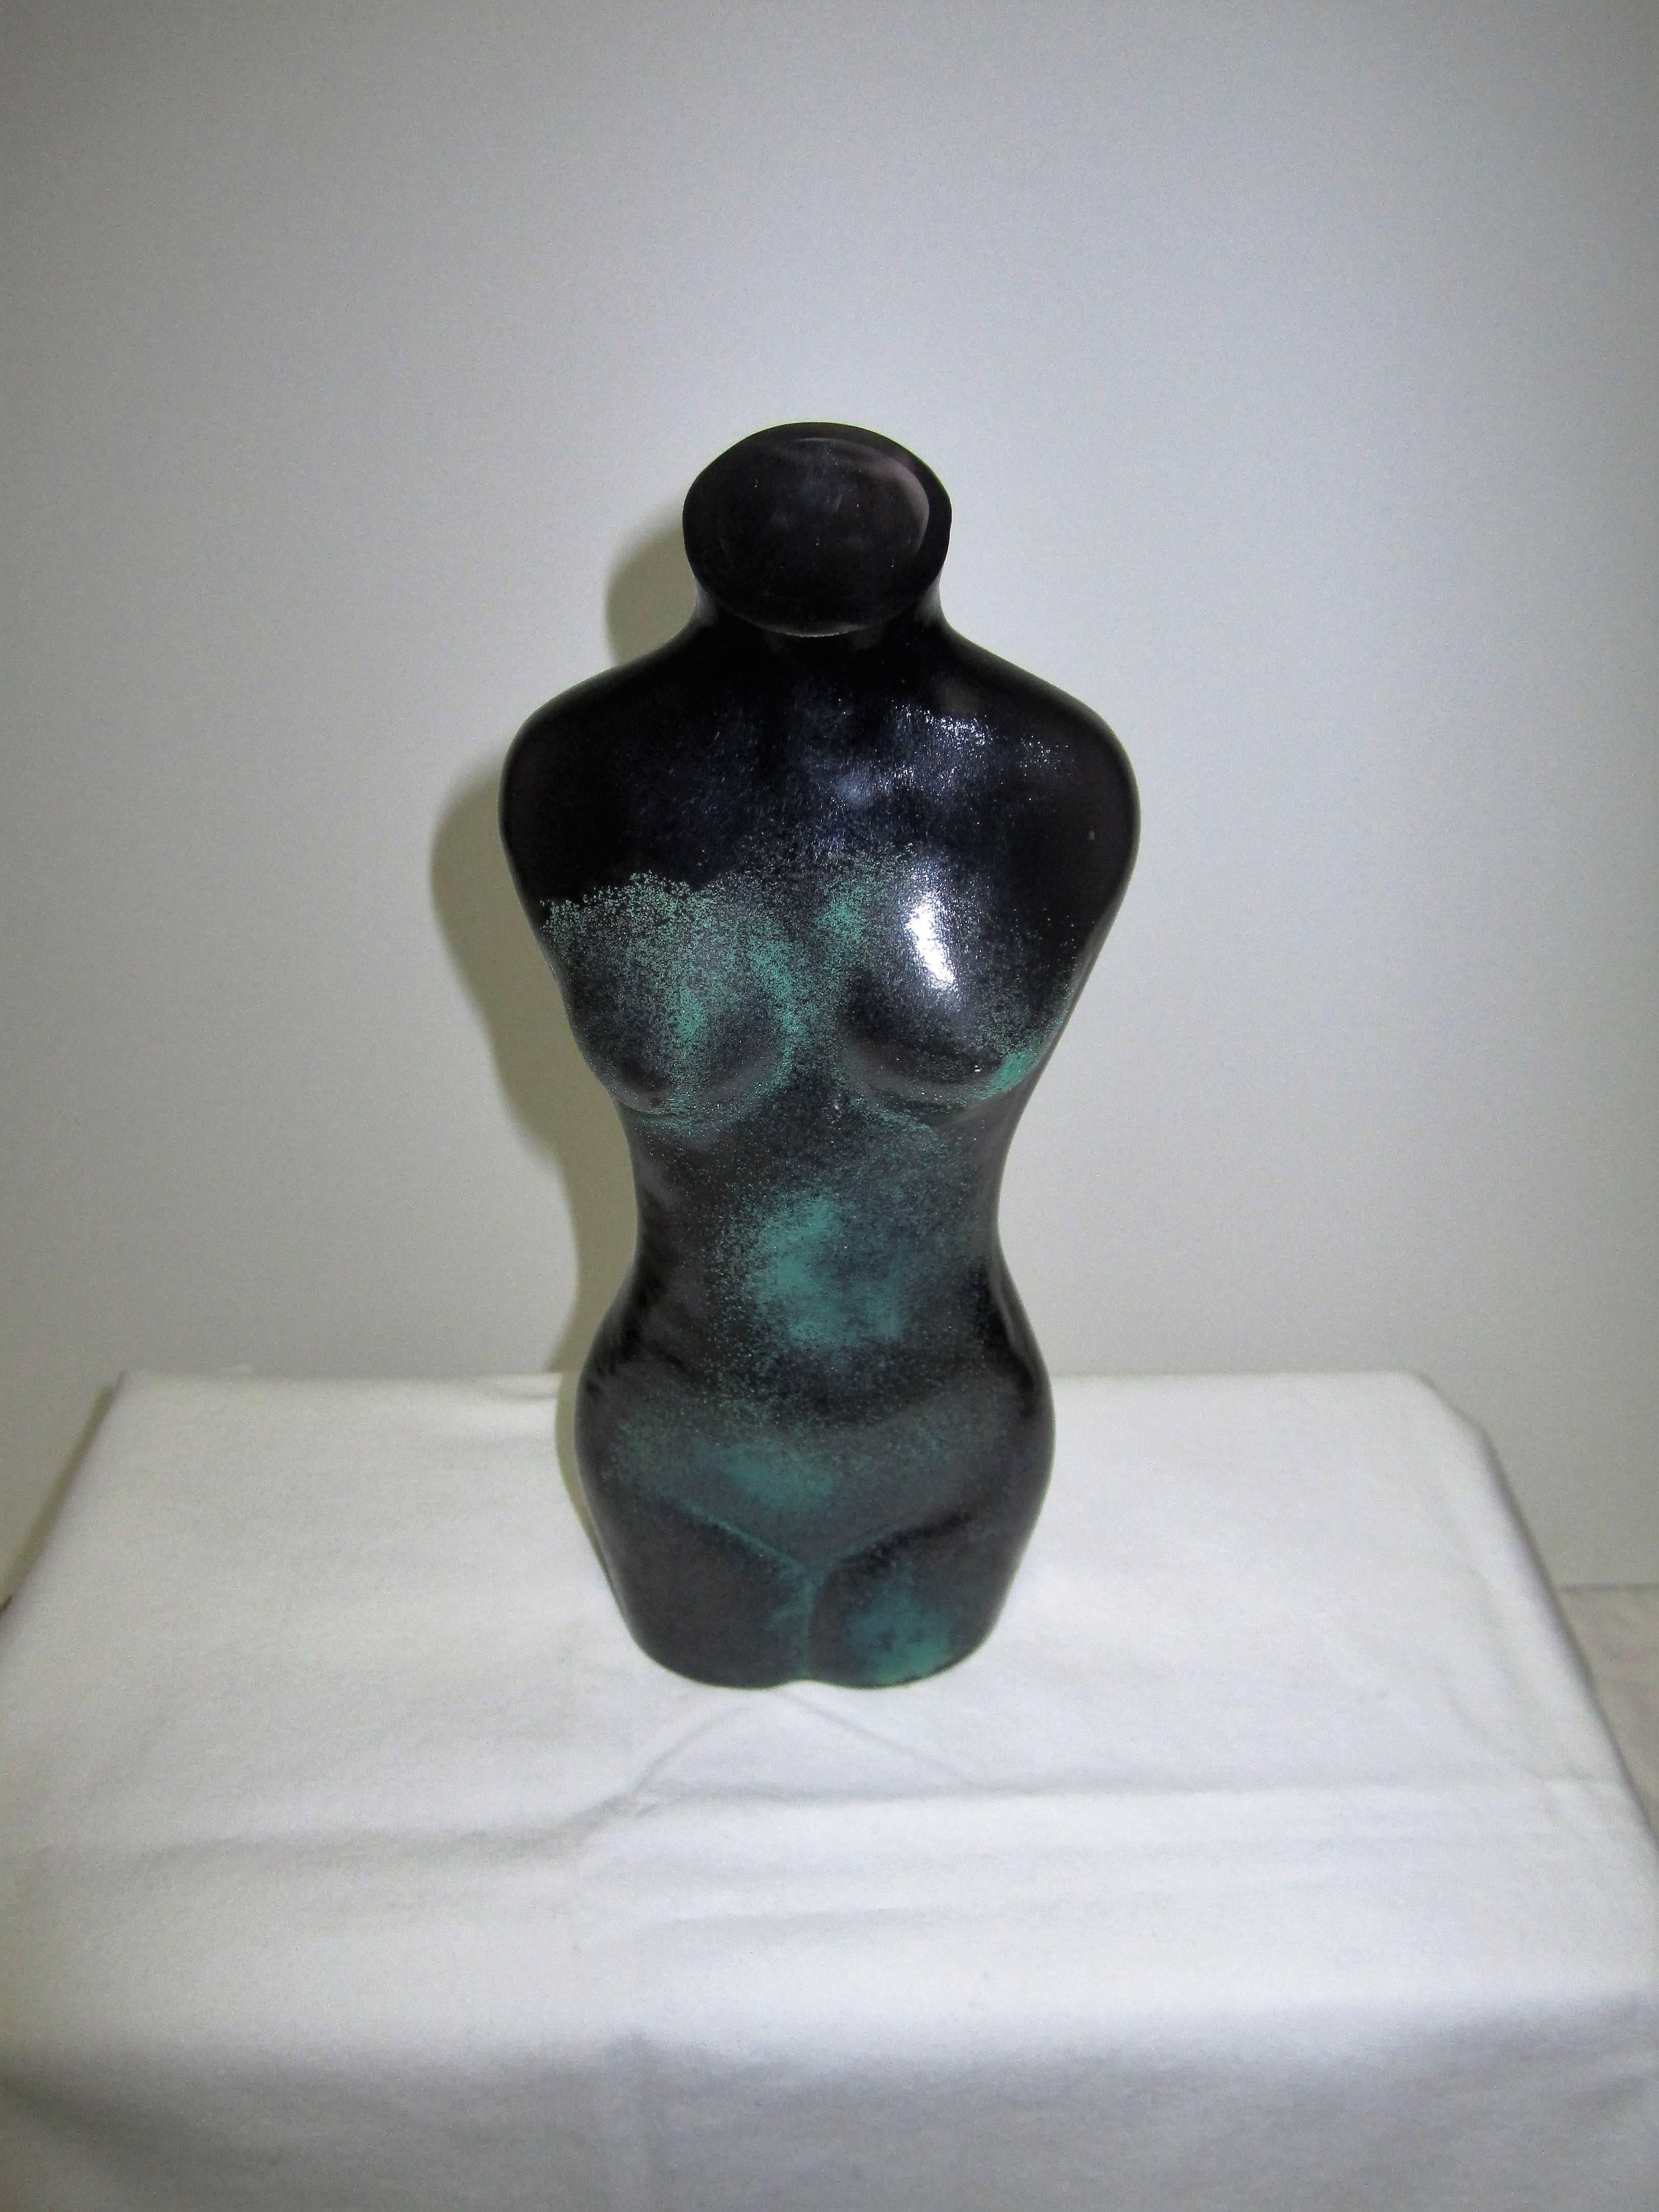 Scandinavian Modernist Female Nude Torso Sculpture Vessel by Renate Stock 1